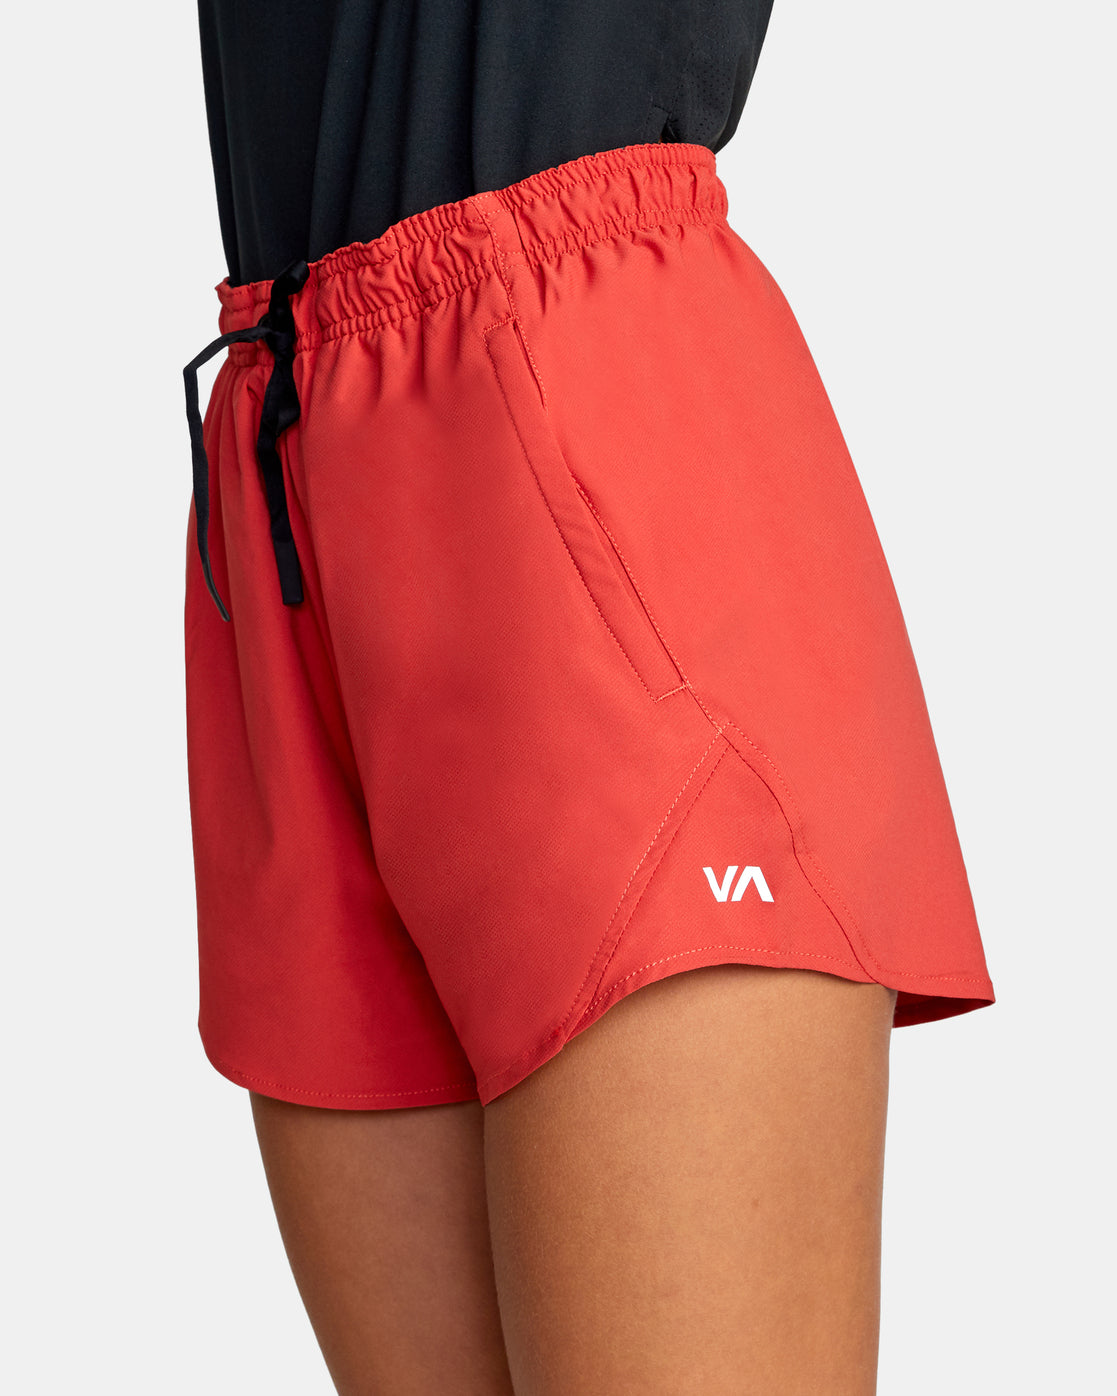 RVCA VA Women's Essential Yogger Workout Short